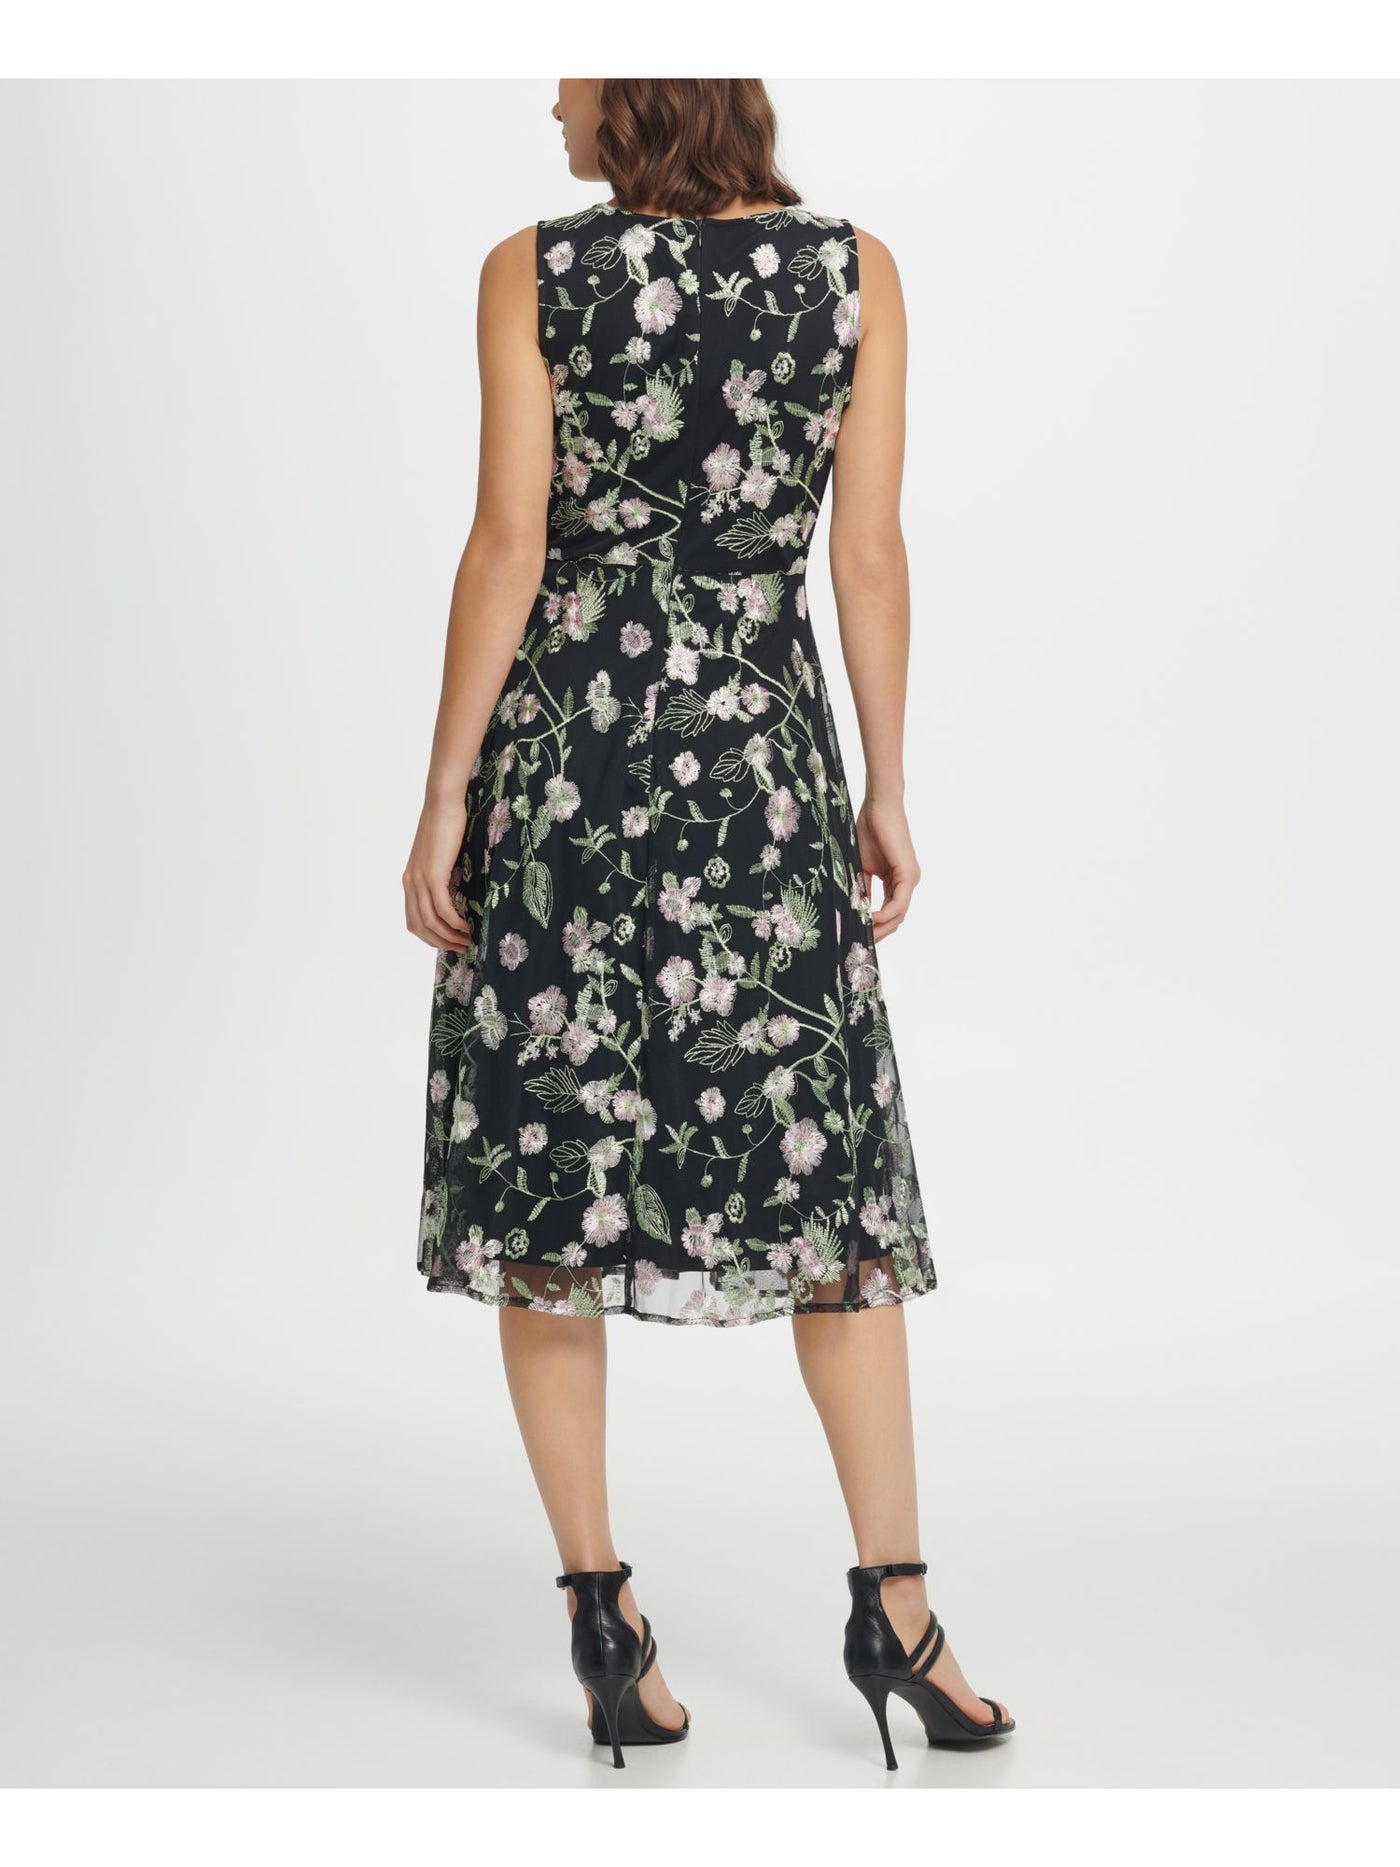 DKNY Womens Black Floral Sleeveless Jewel Neck Below The Knee Evening Fit + Flare Dress 10